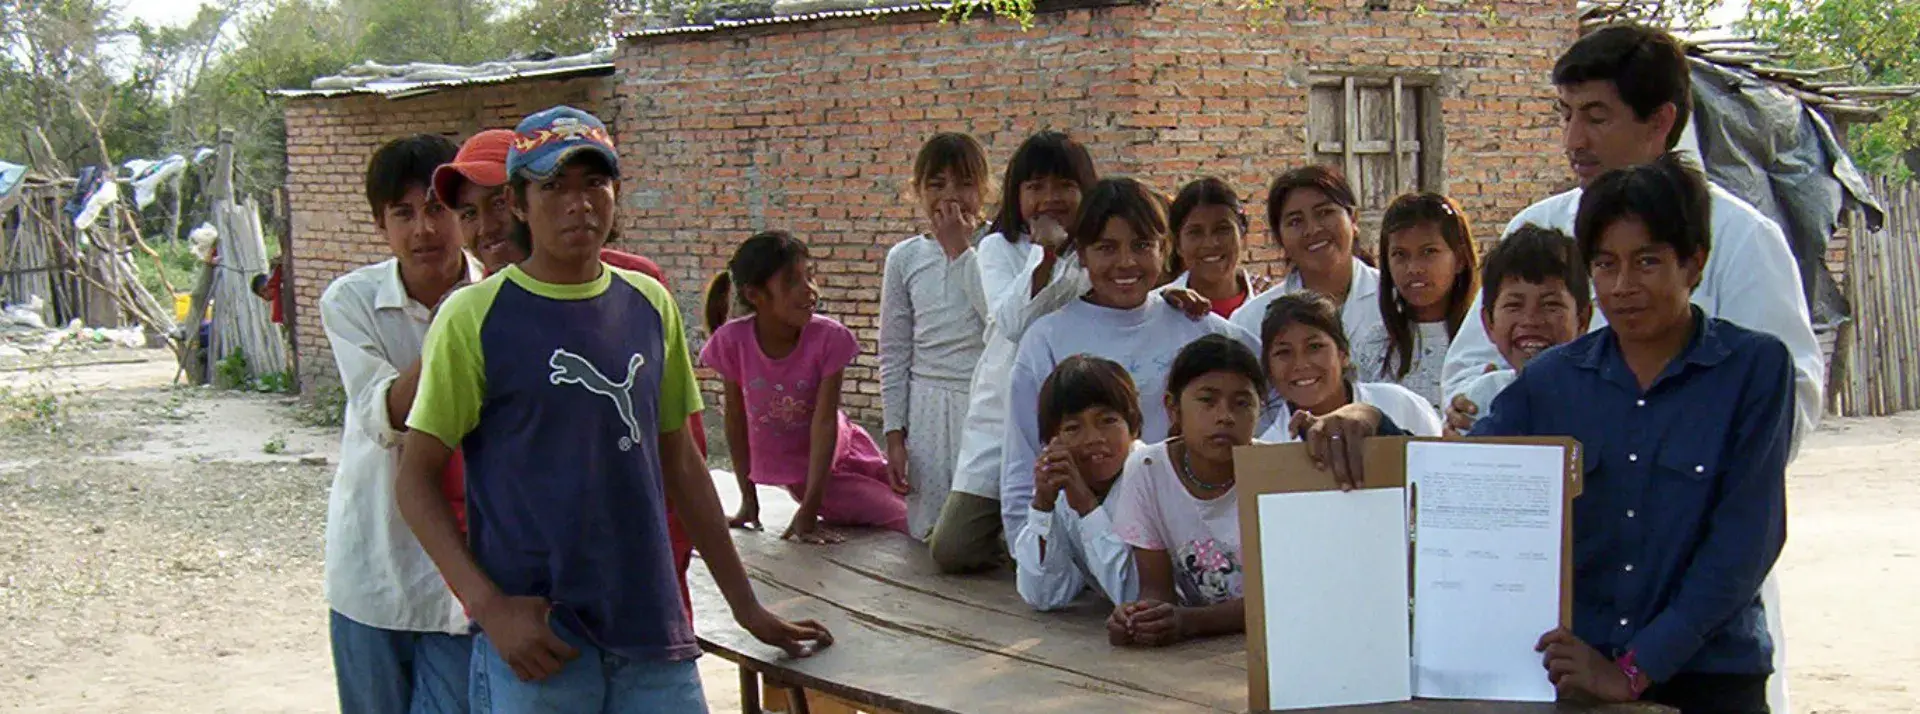 Project 2004 School Gral. San Martin – Pasaje Las Bravas, Province of Chaco.